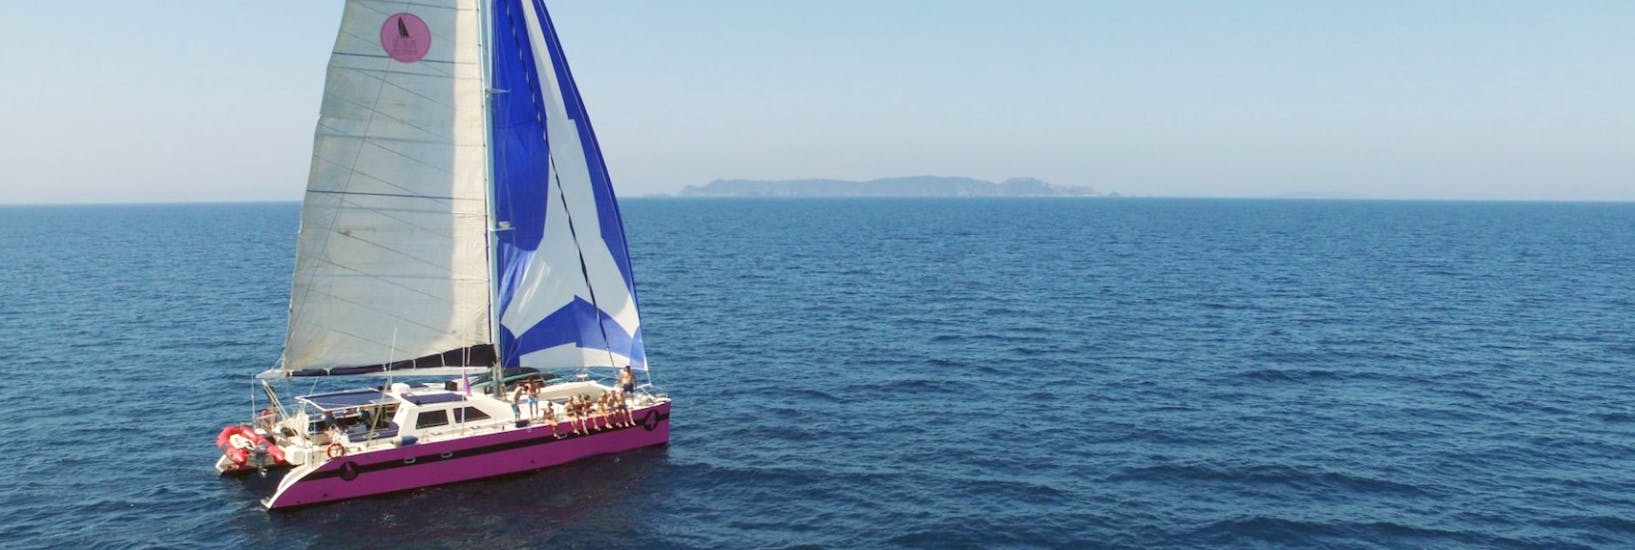 A family does a Sunset Catamaran Trip in the Bay of Quiberon with Caseneuve Maxi Catamaran.